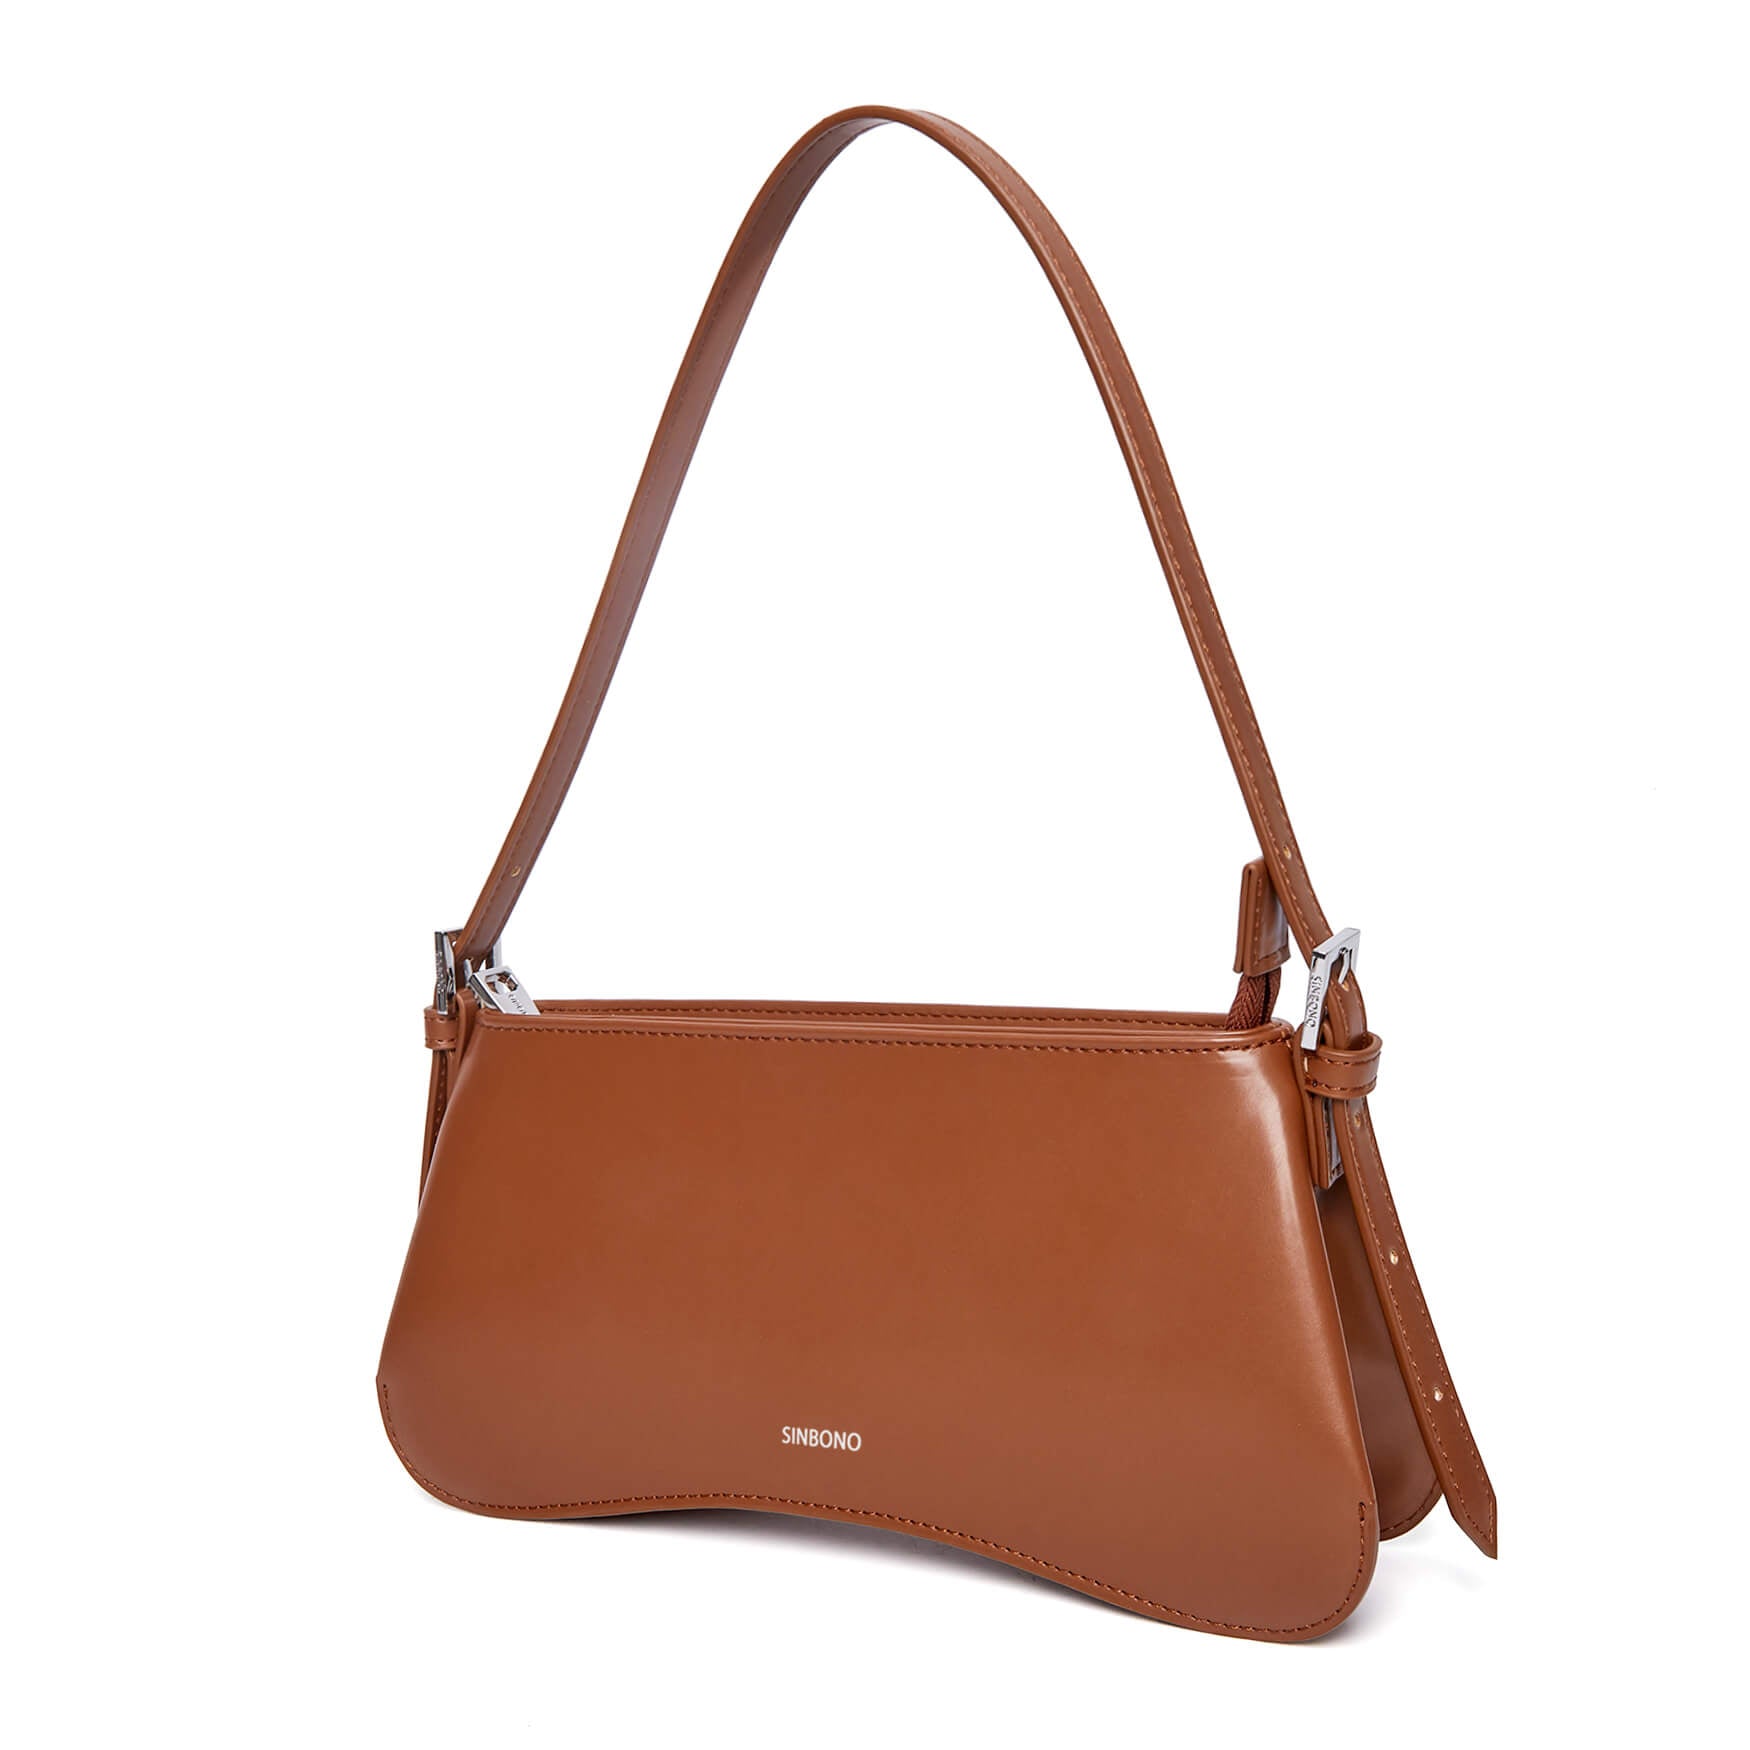 SINBONO Eva Shoulder Bag Dark Brown | Ecofriendly leather bag for women